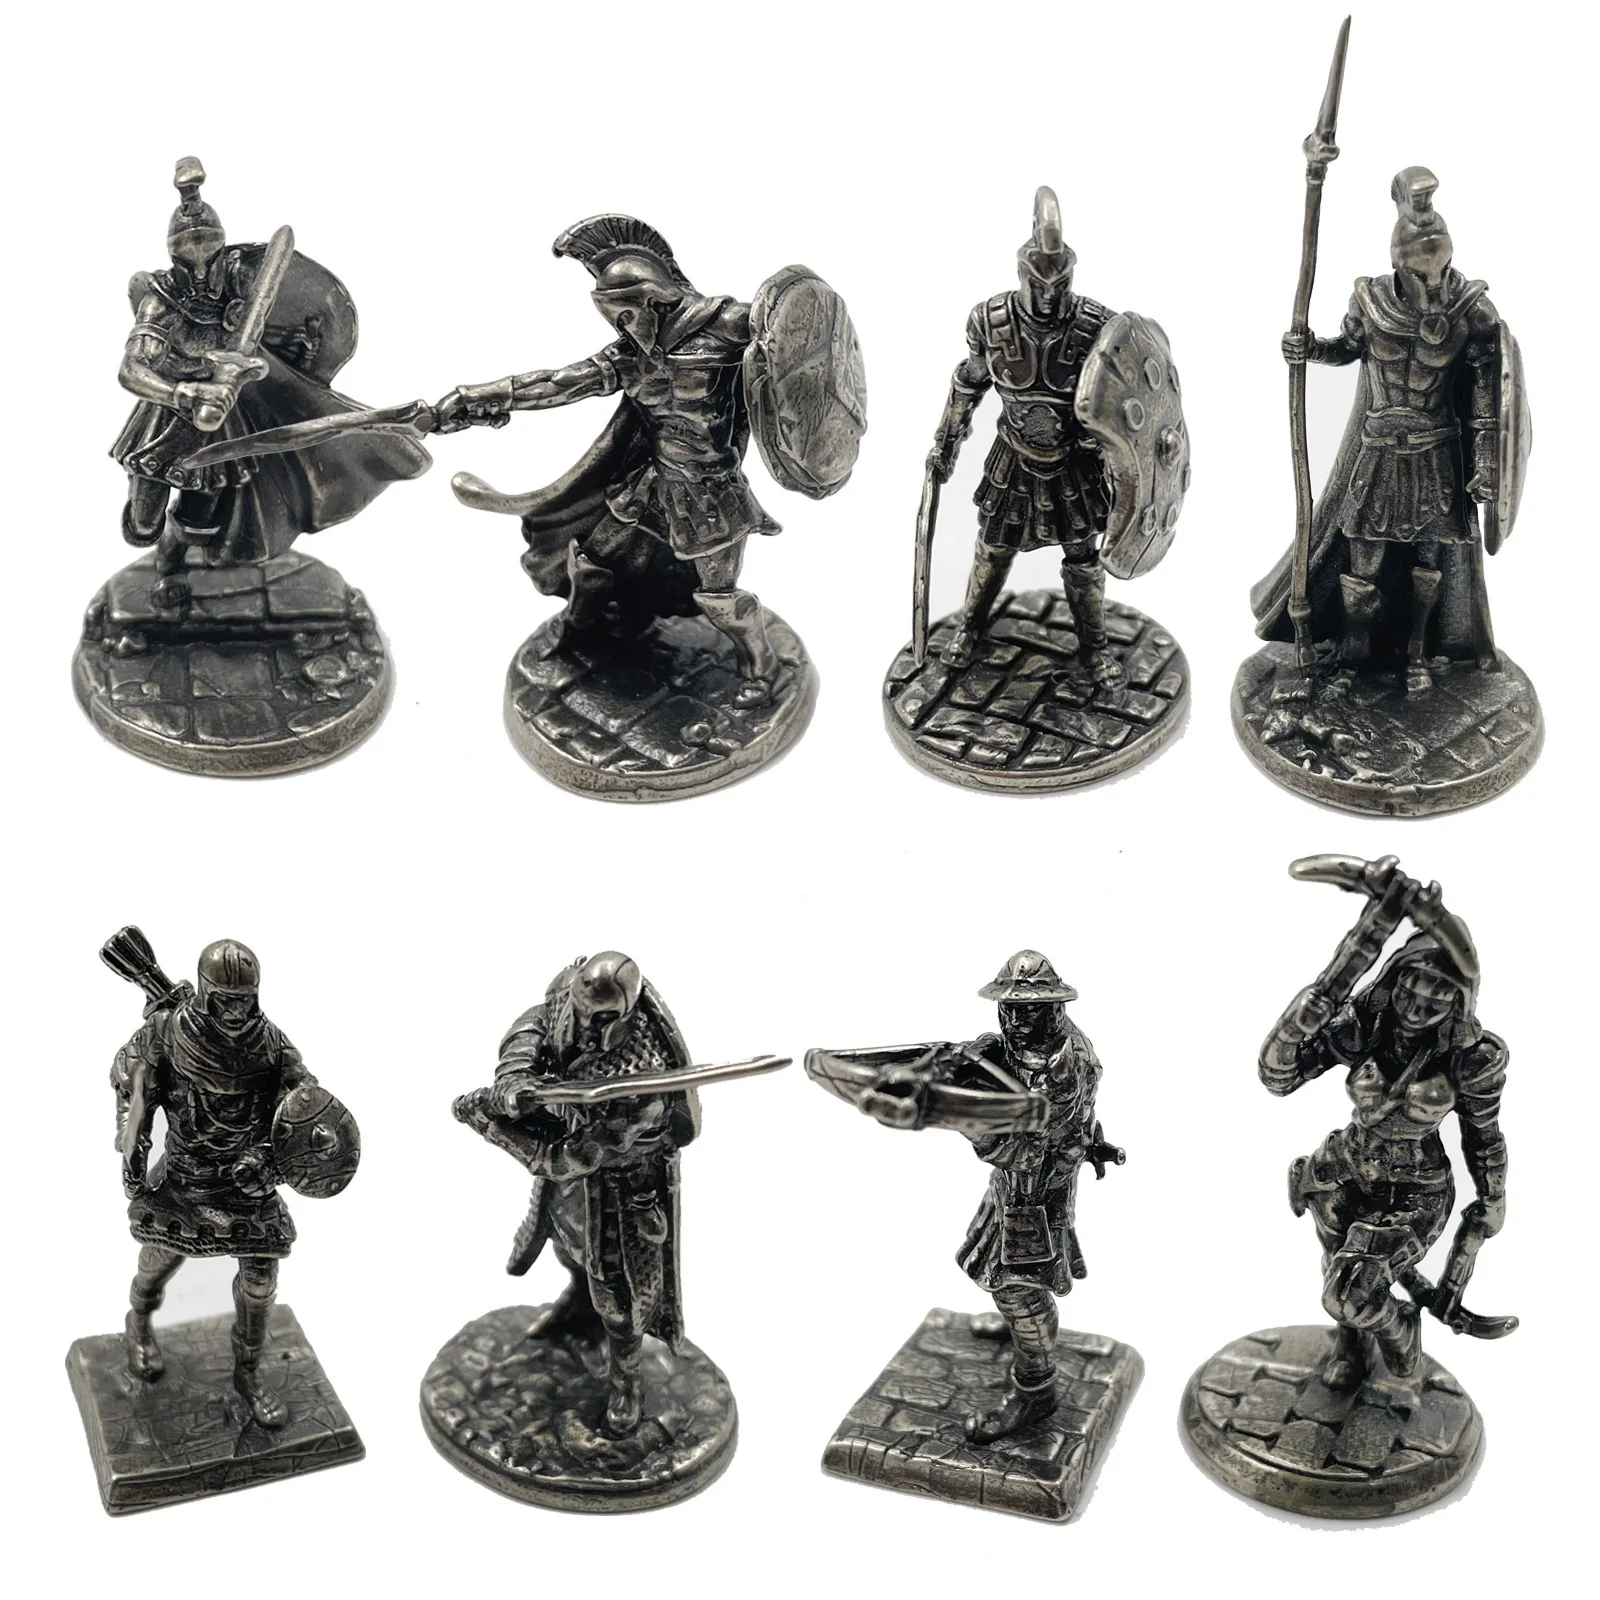 

1pcs Ancient Spartan Rome Soliders Figurines Miniatures Vintage Metal Soldiers Model Statue Desktop Ornament Gift